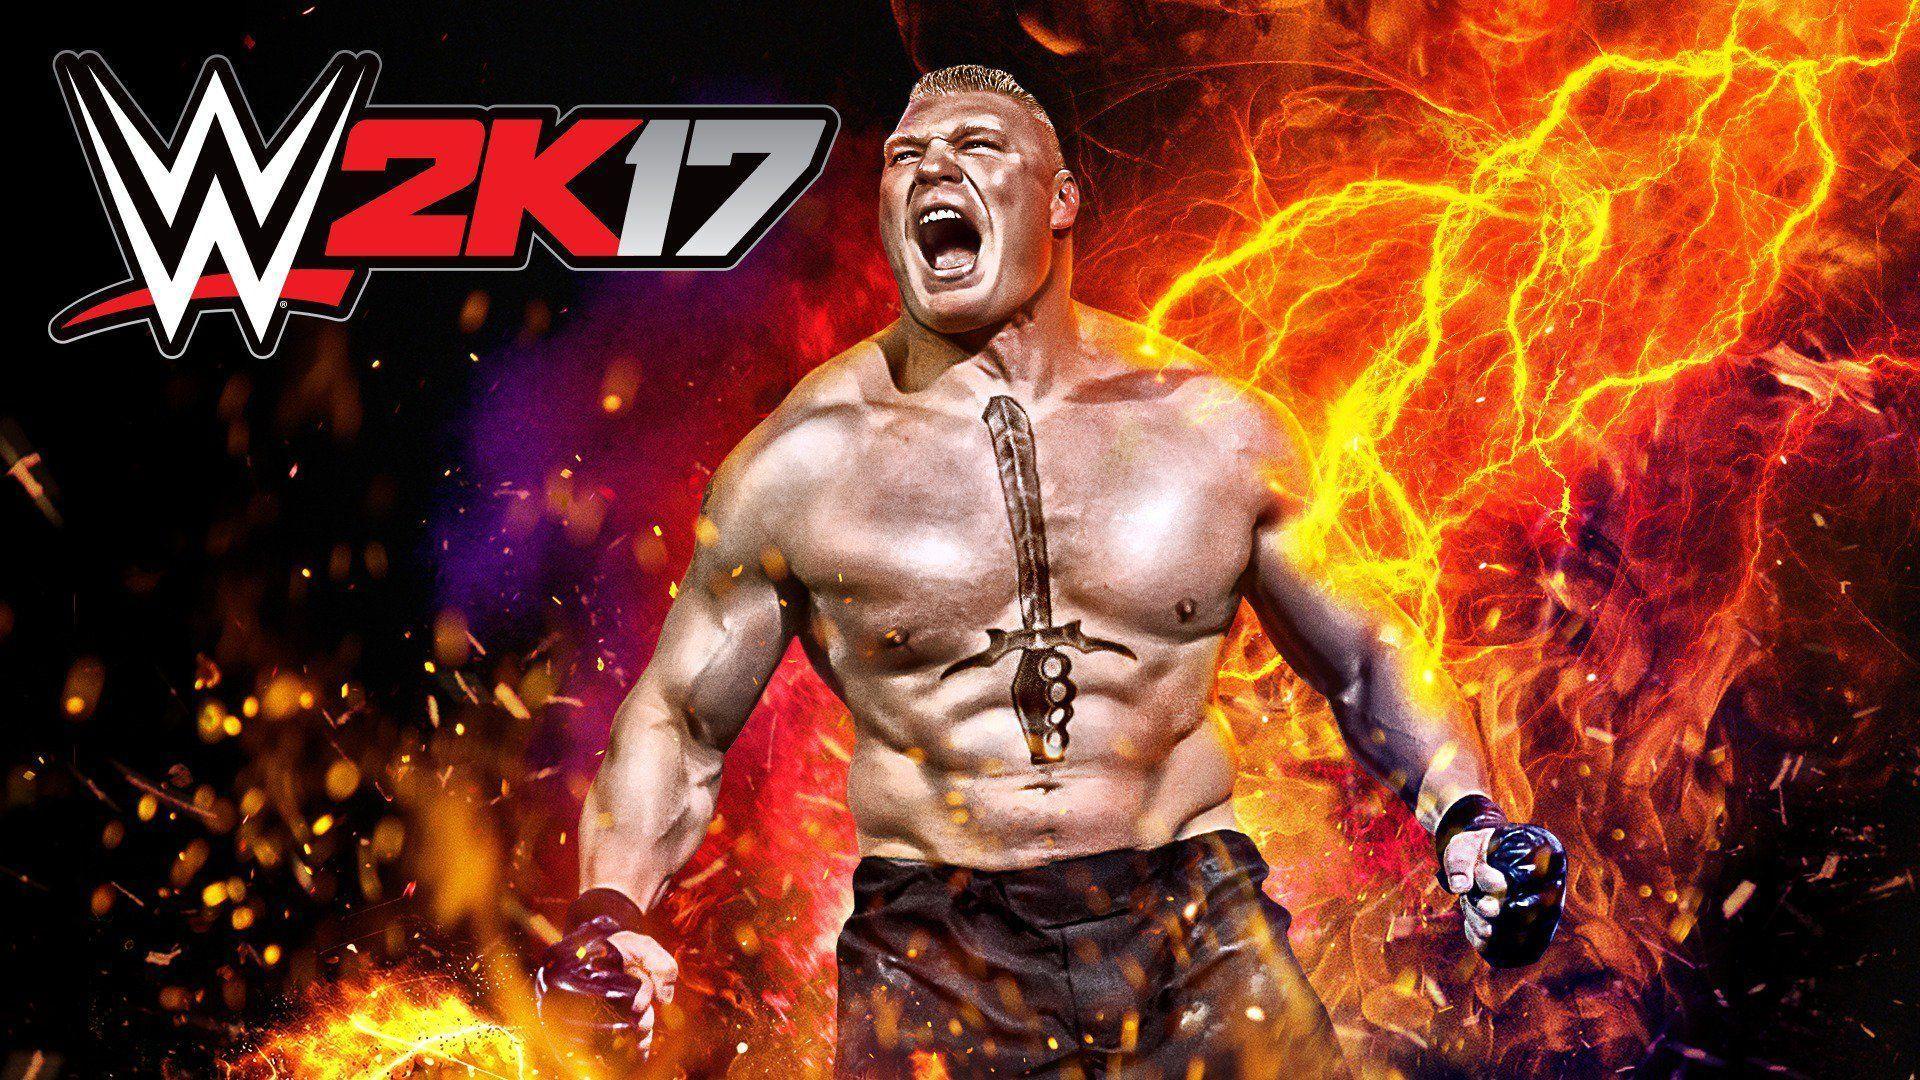 Brock Lesnar announced as cover star for WWE 2K17